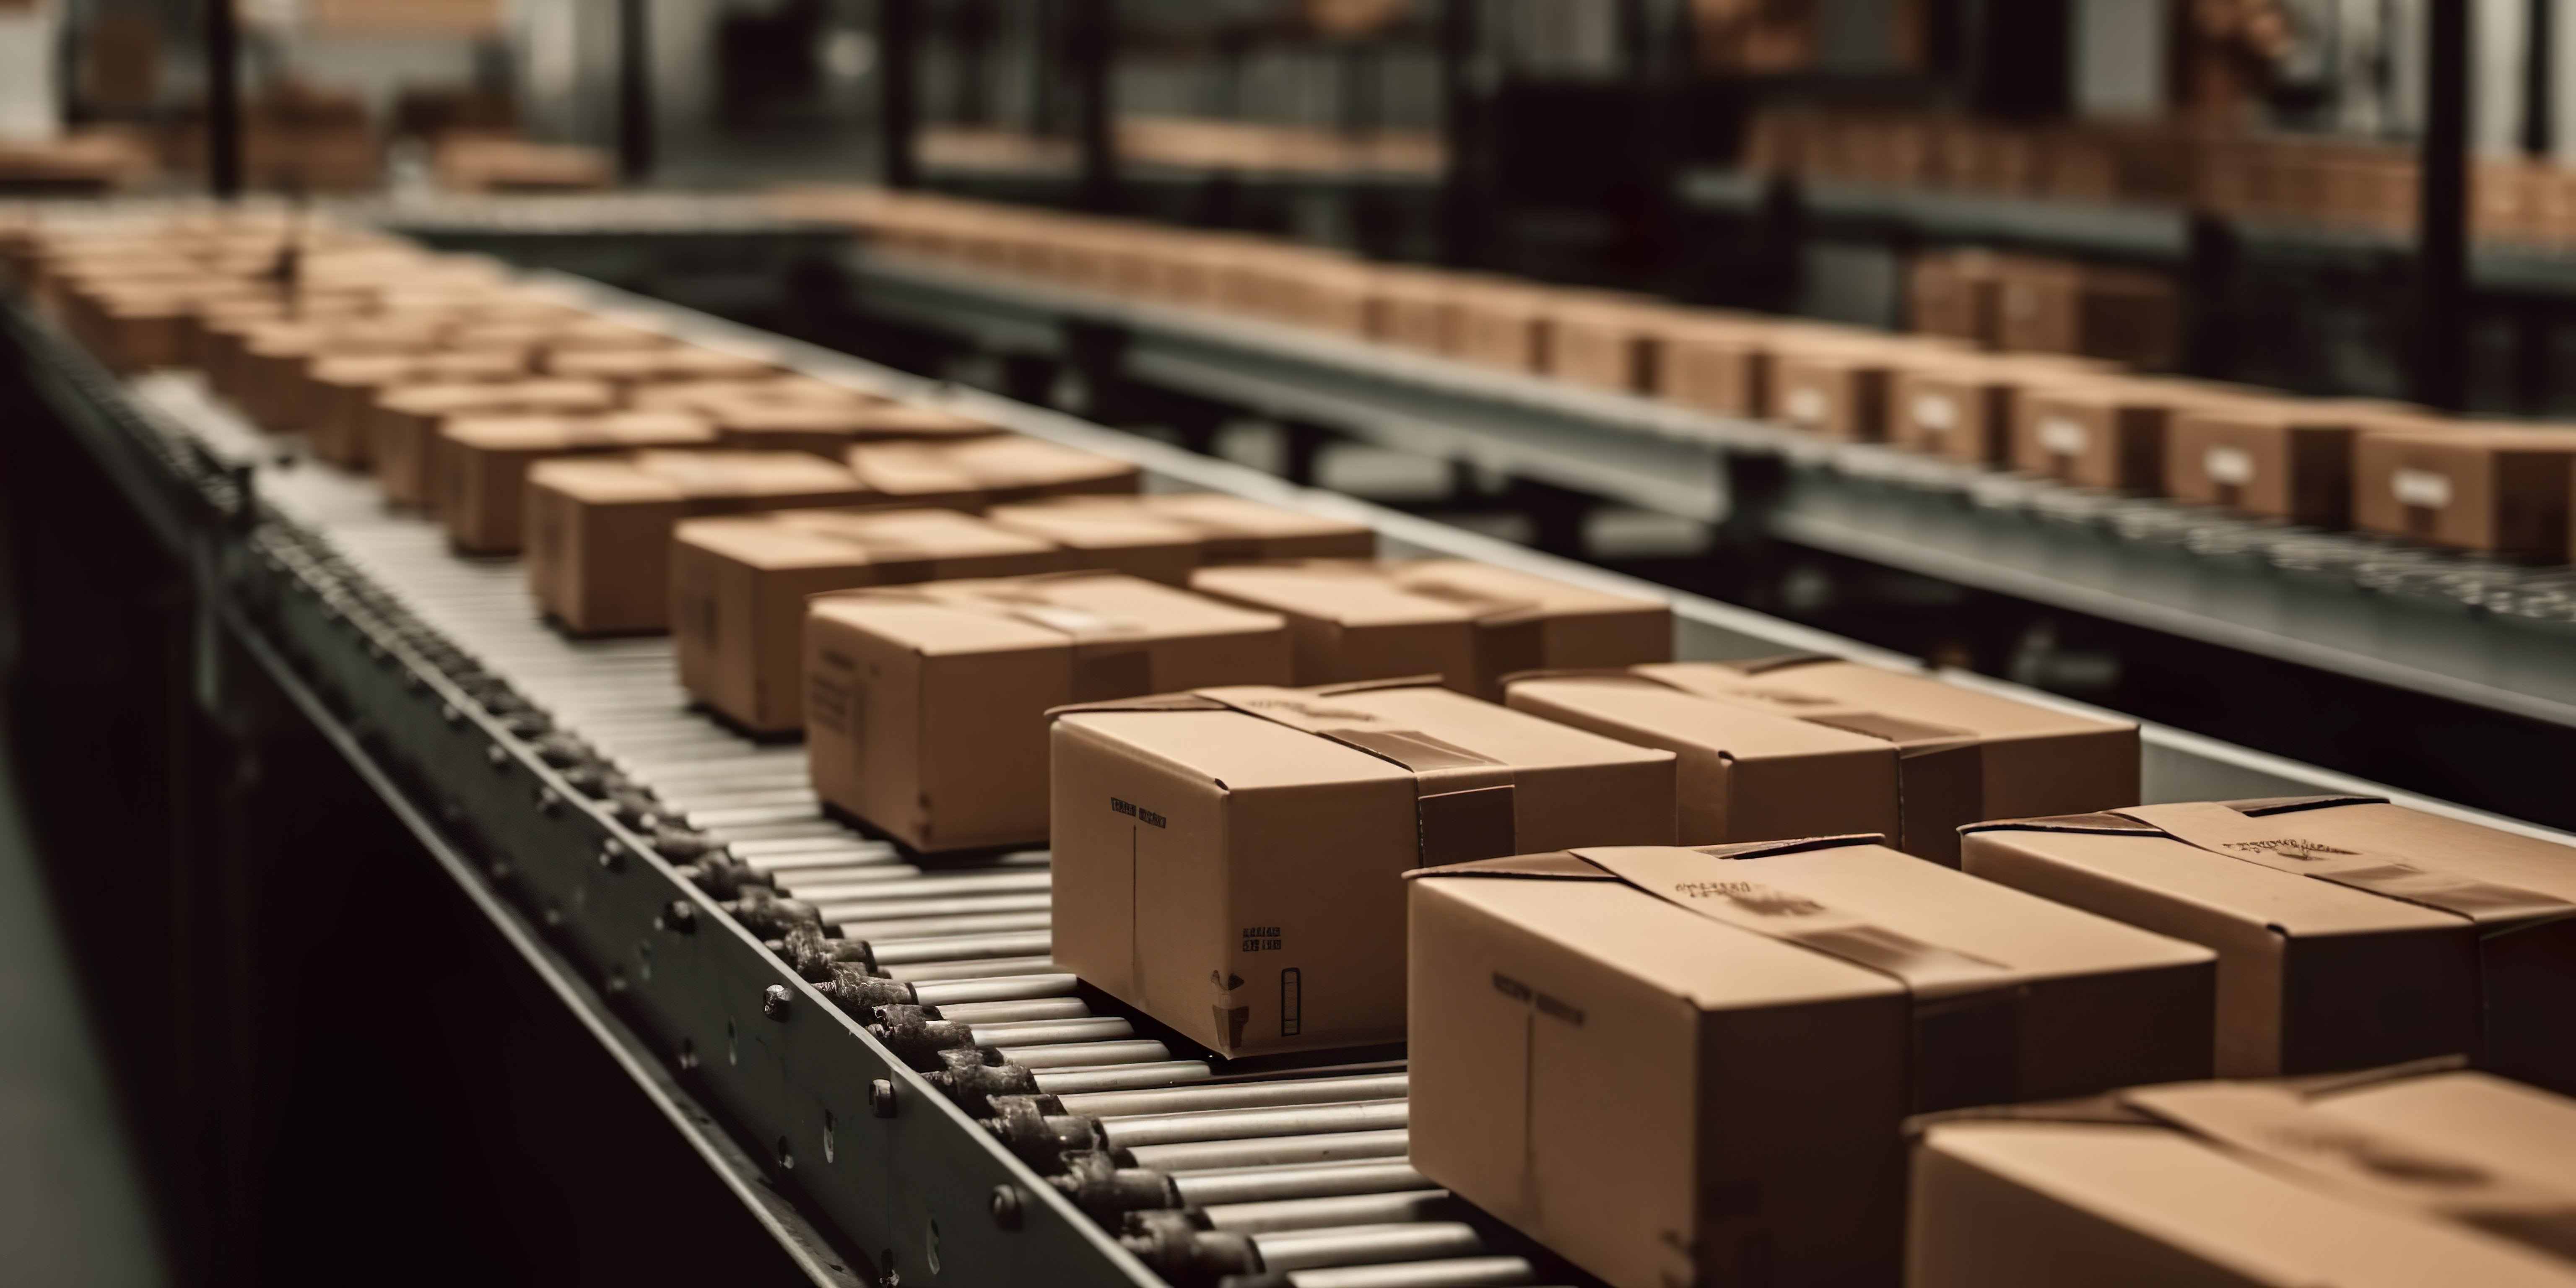 entrega-paquetes-servicio-embalaje-paquetes-cajas-carton-cinta-transportadora-concepto-sistema-transporte-almacen